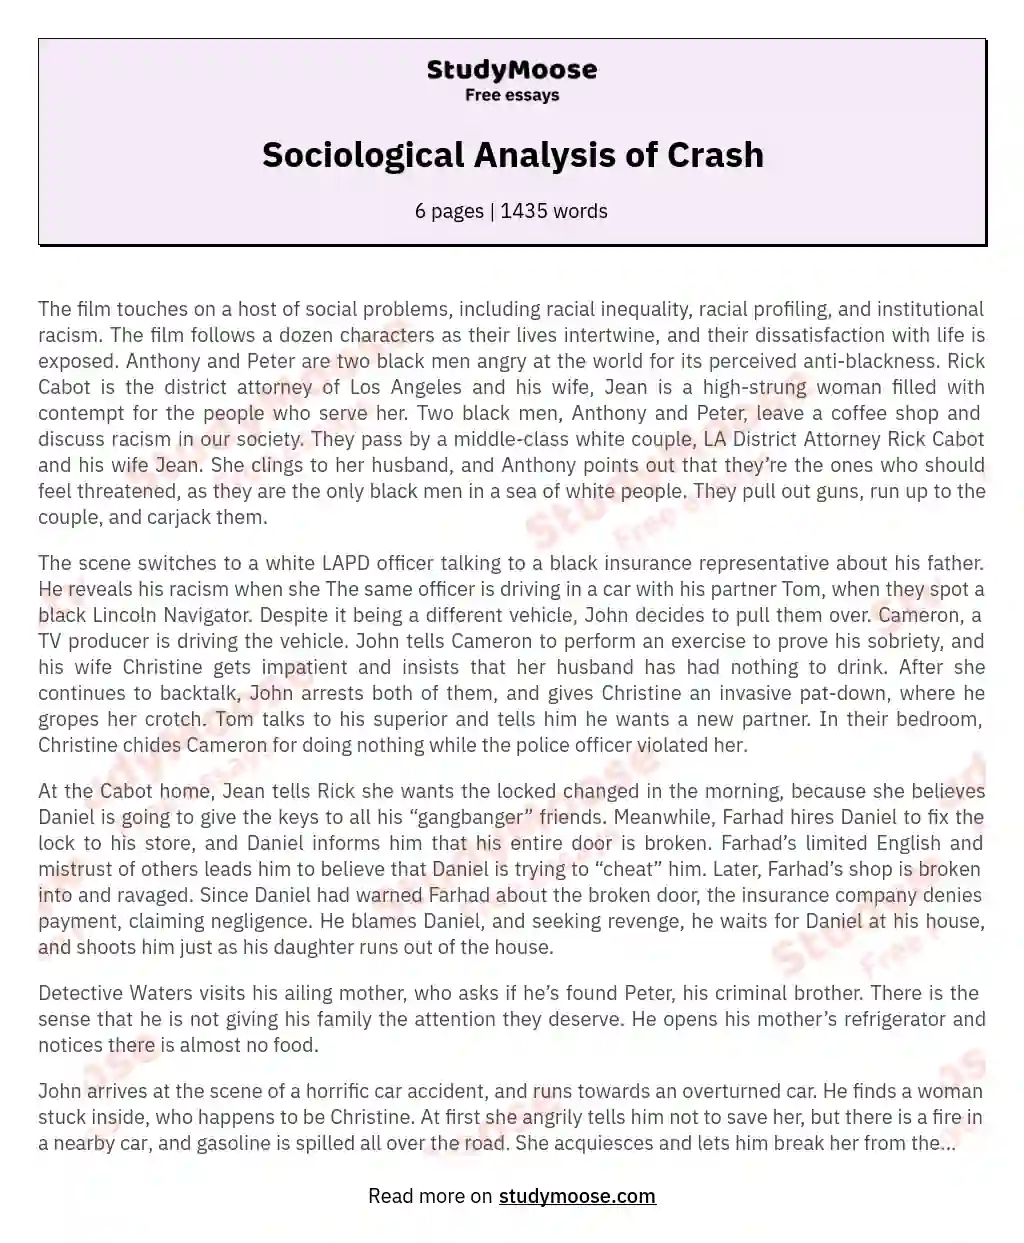 Sociological Analysis of Crash essay